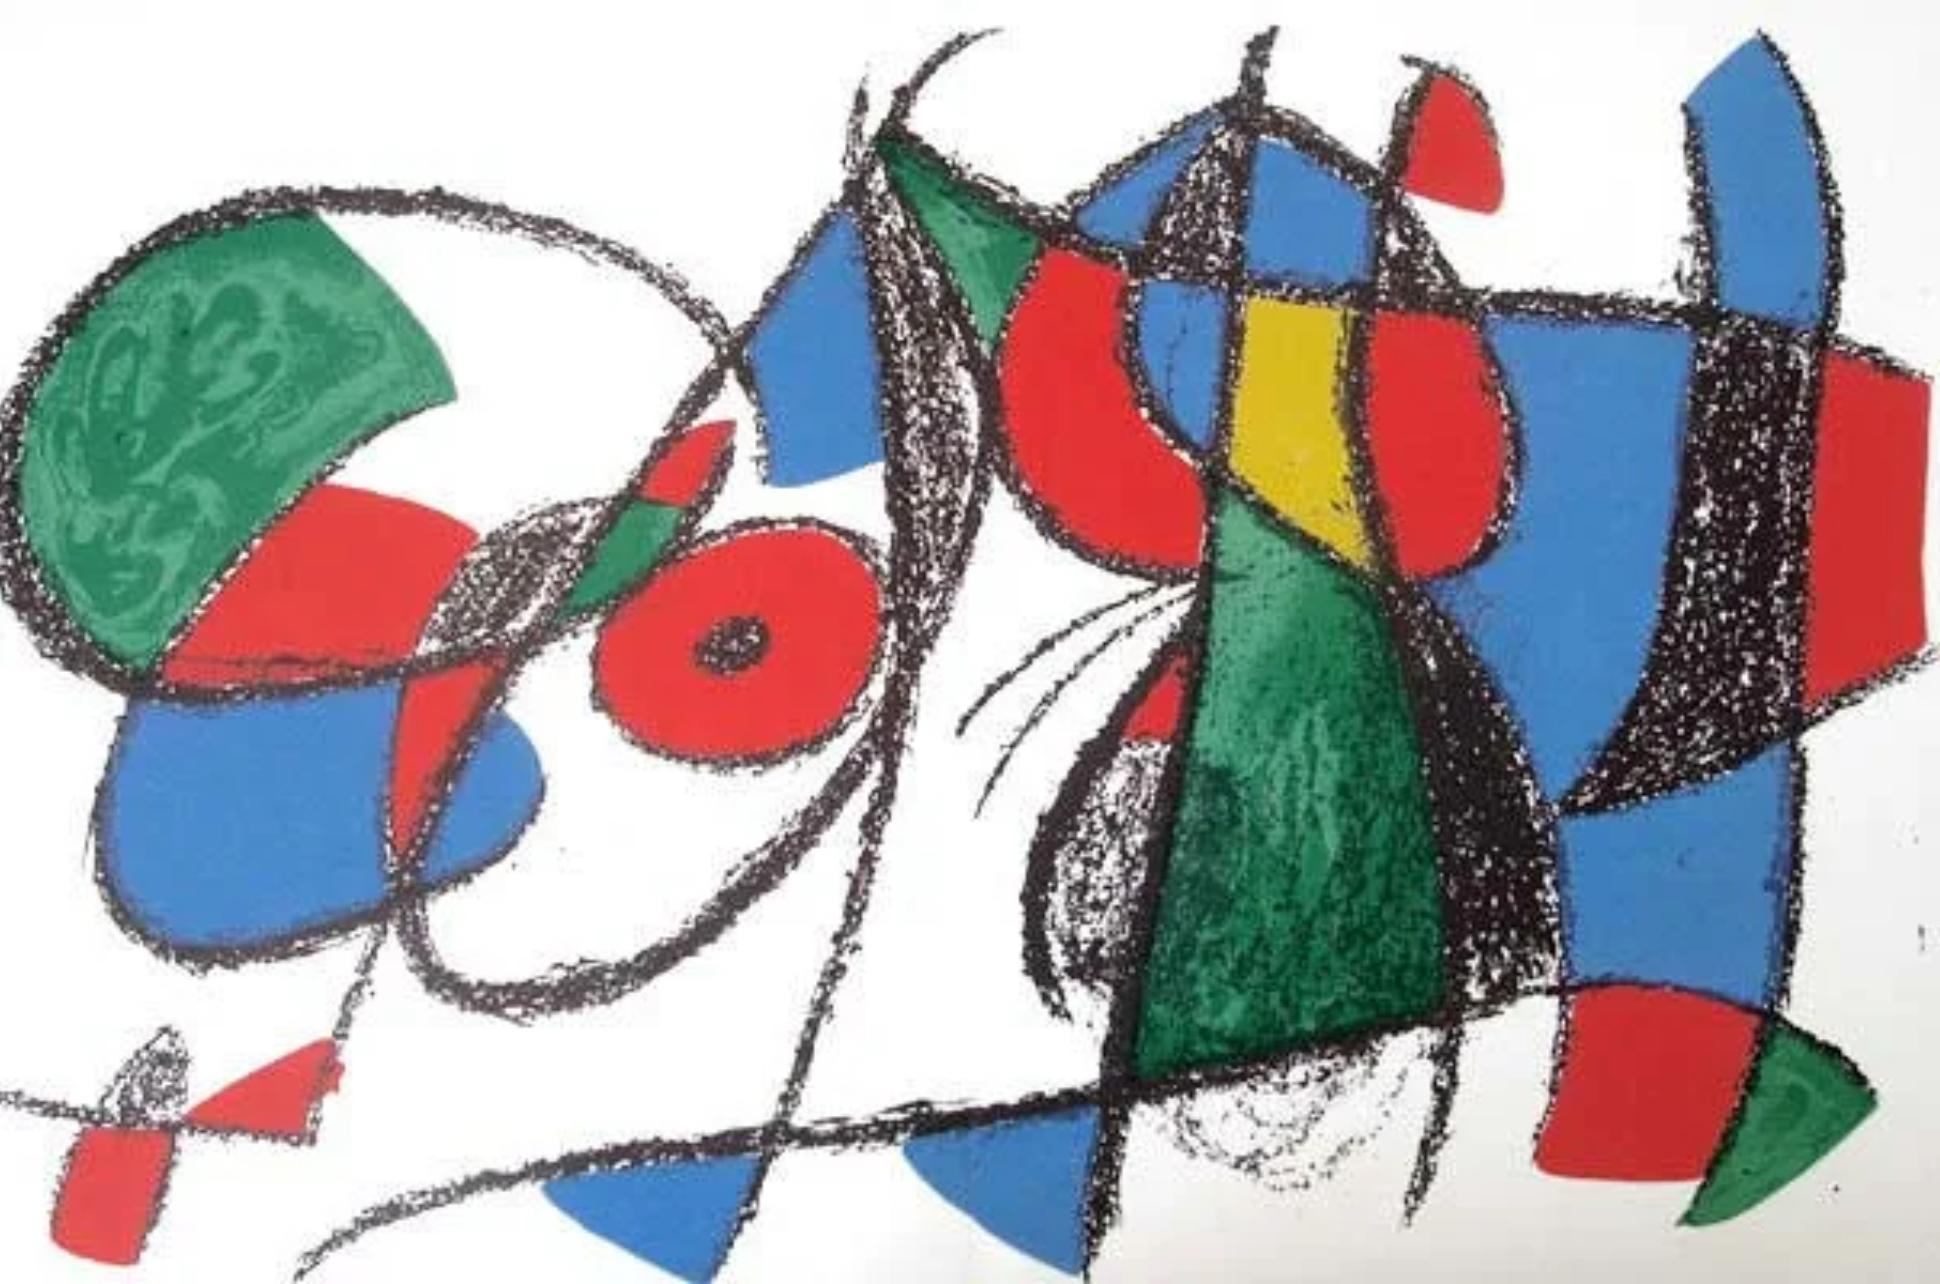 Abstract Print Joan Miró - Miro, Composition (Mourlot 1044), 1975 (après)